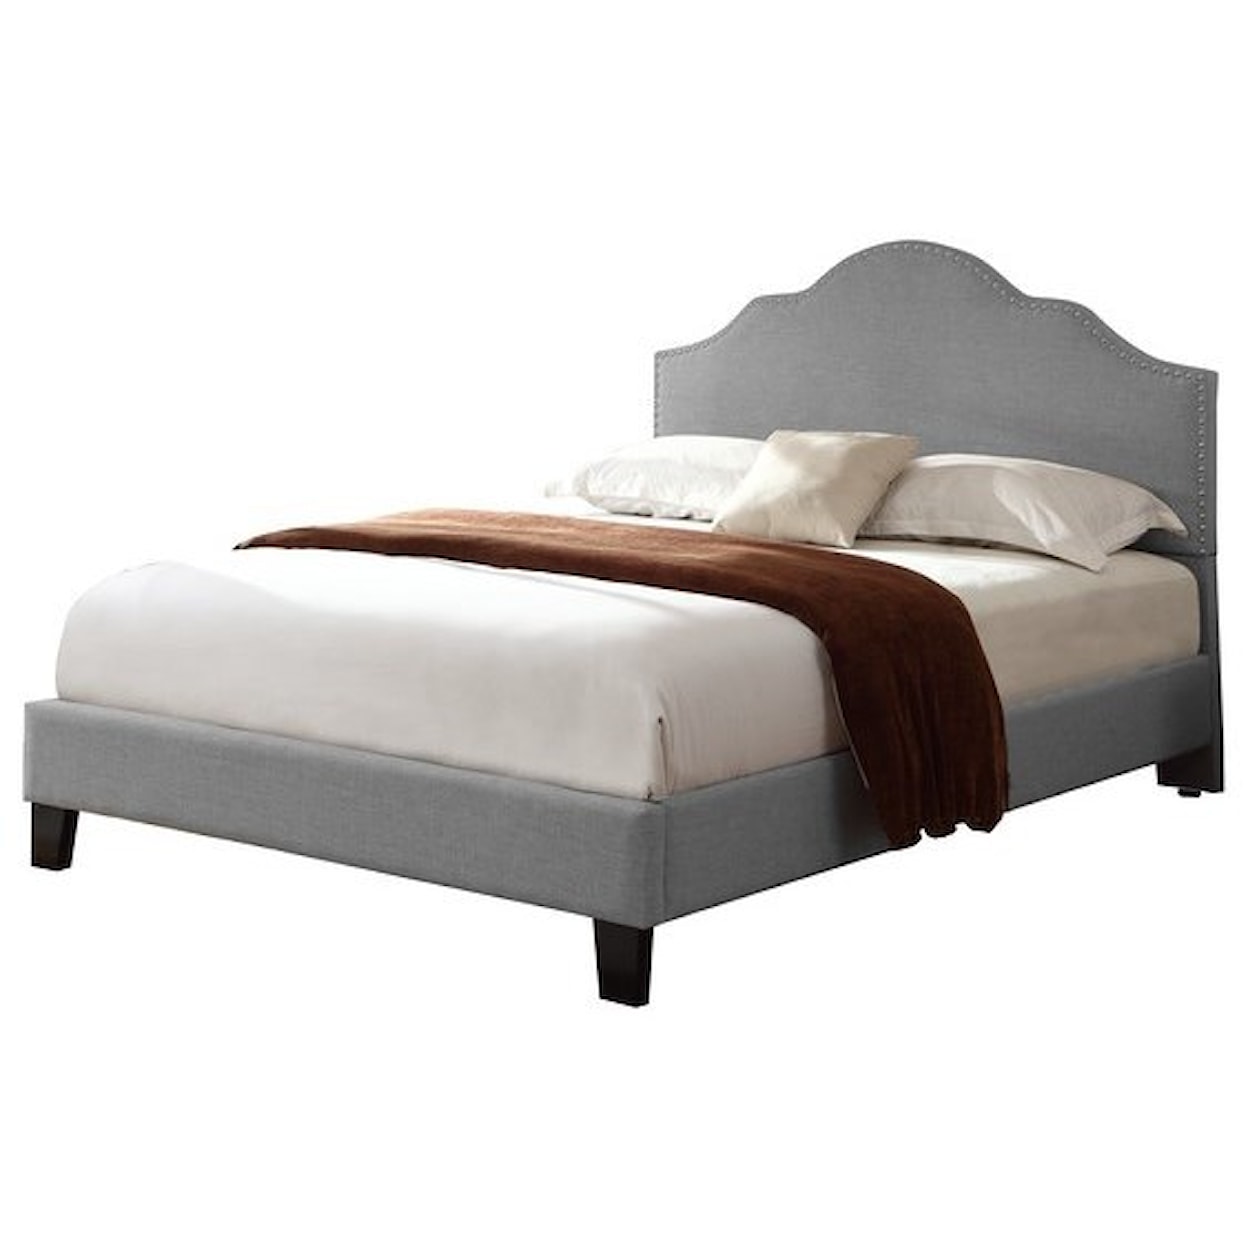 Emerald Madison Full Upholstered Bed